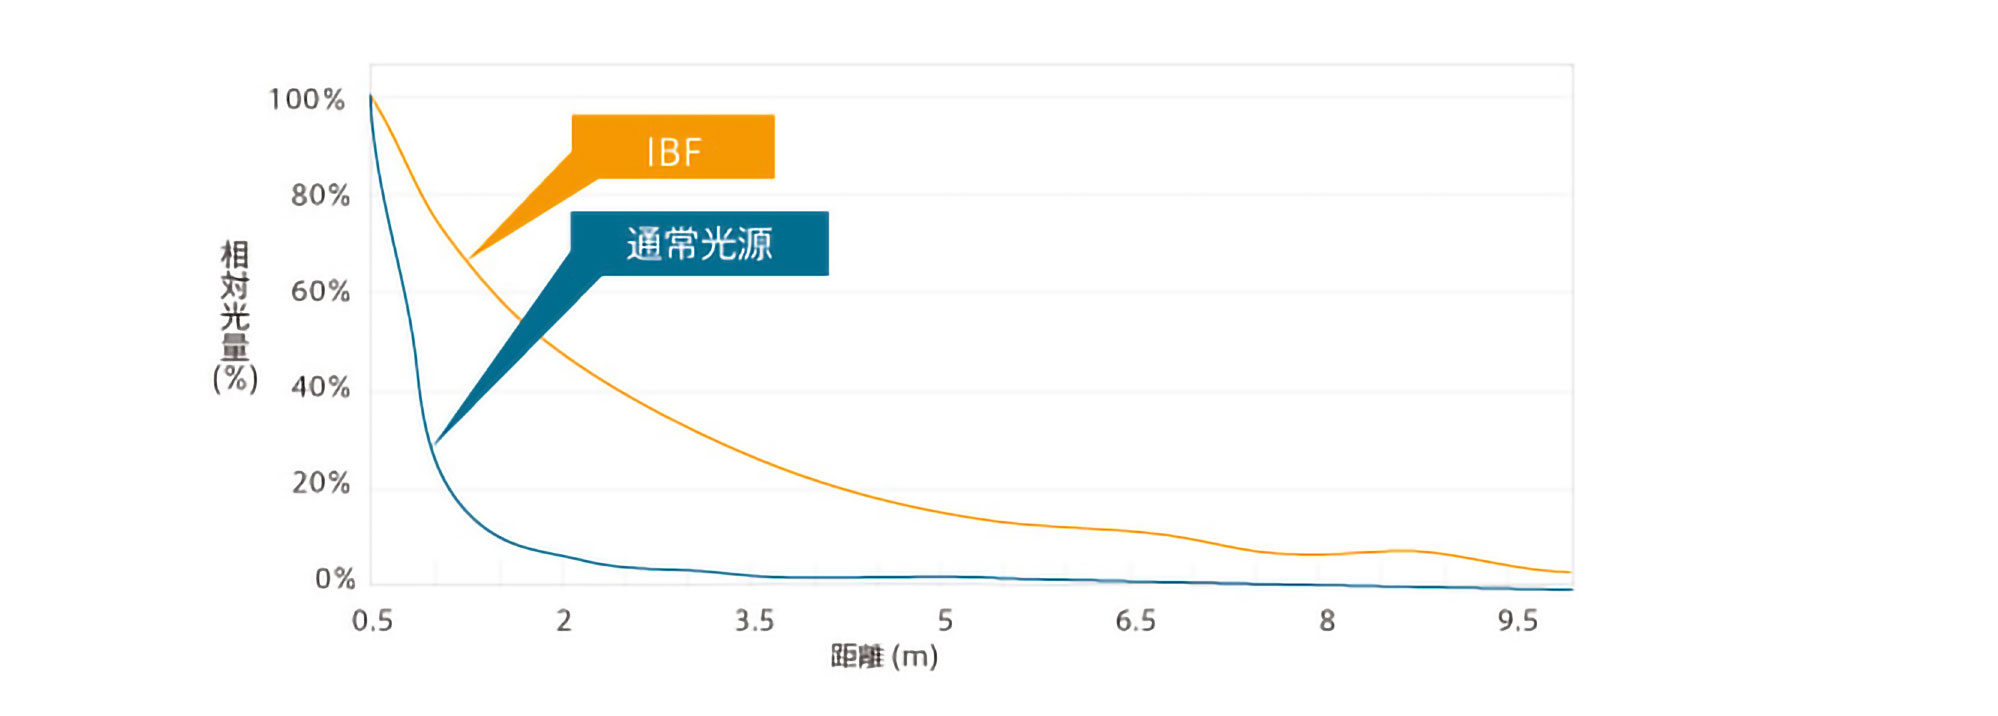 IBF Product Description 04